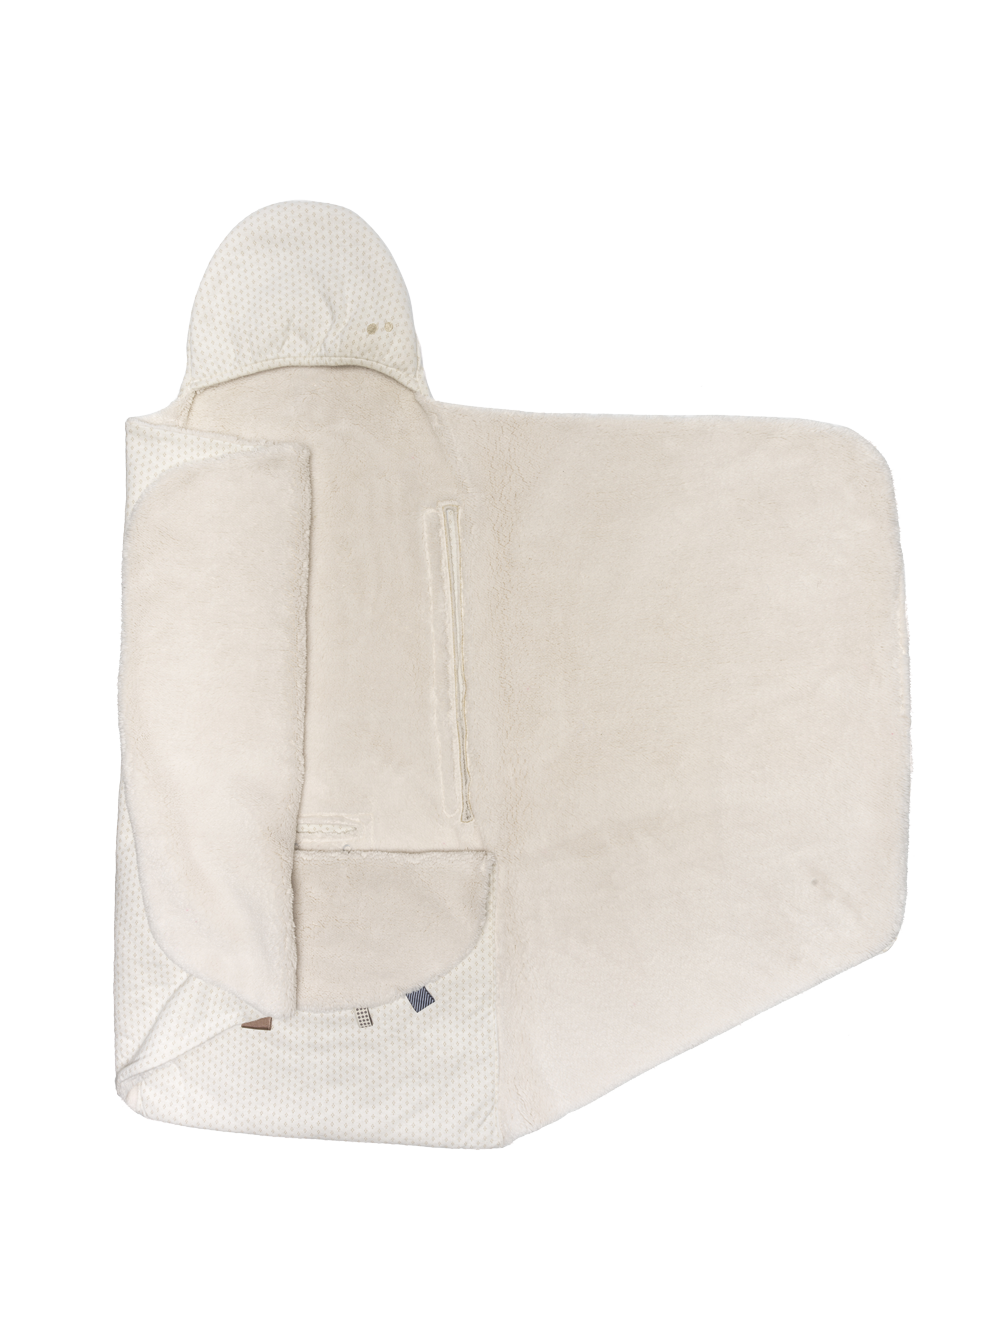 ORGANIC Wrap Blanket Trendy Wrapping (90x110cm) Stone Beige